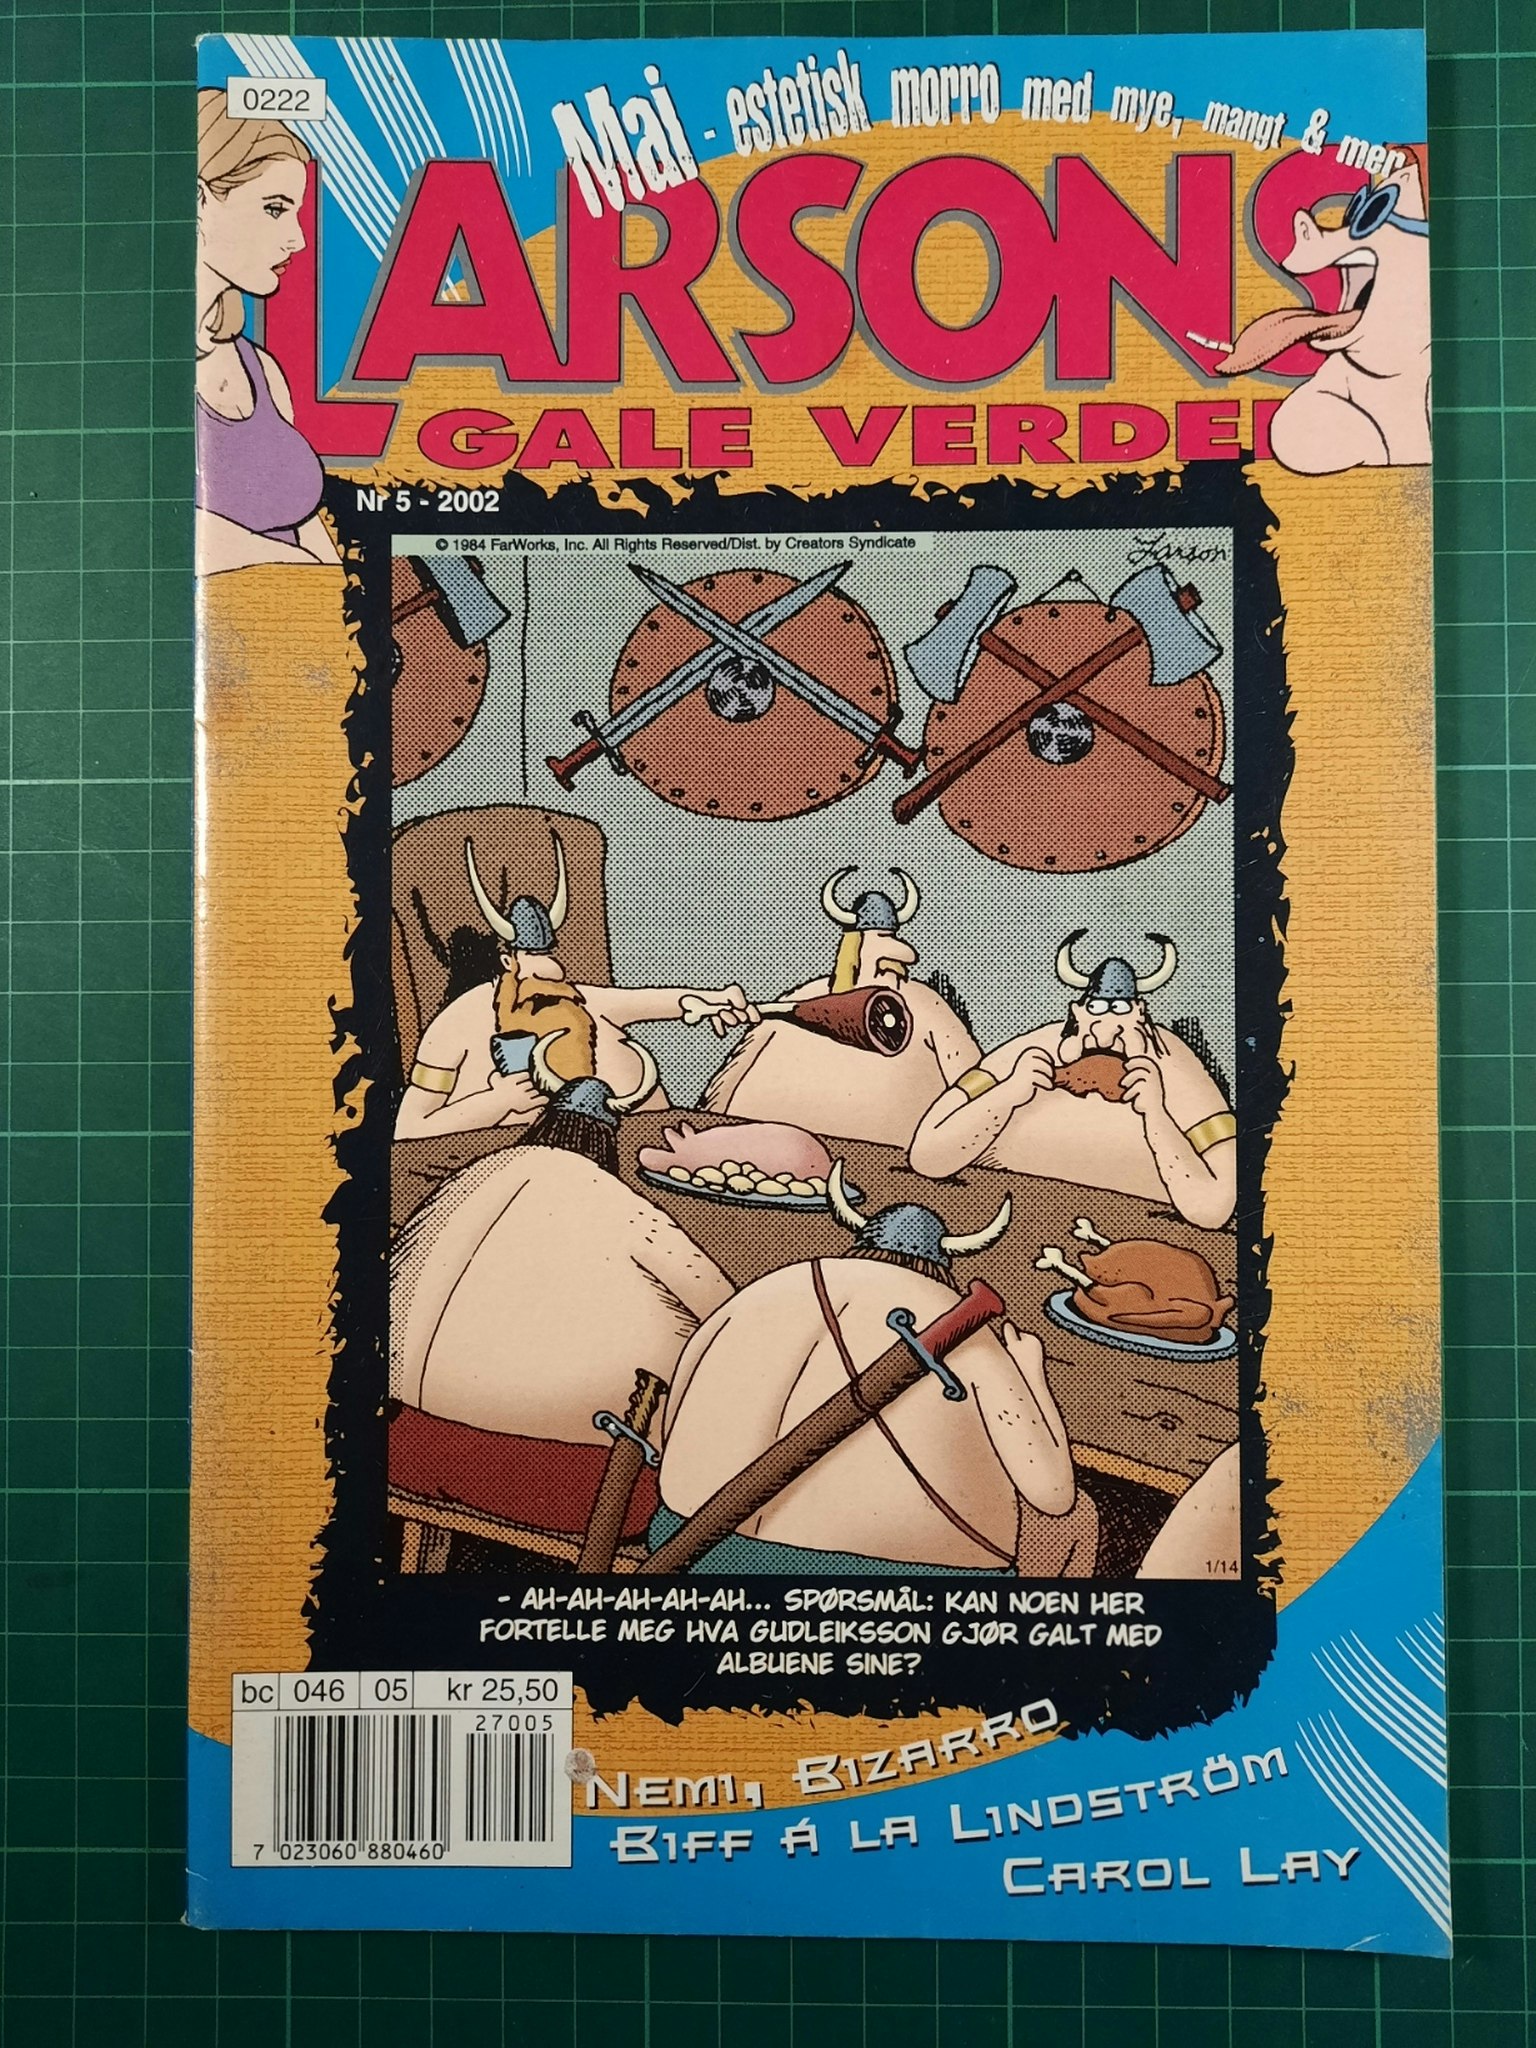 Larsons gale verden 2002 - 05